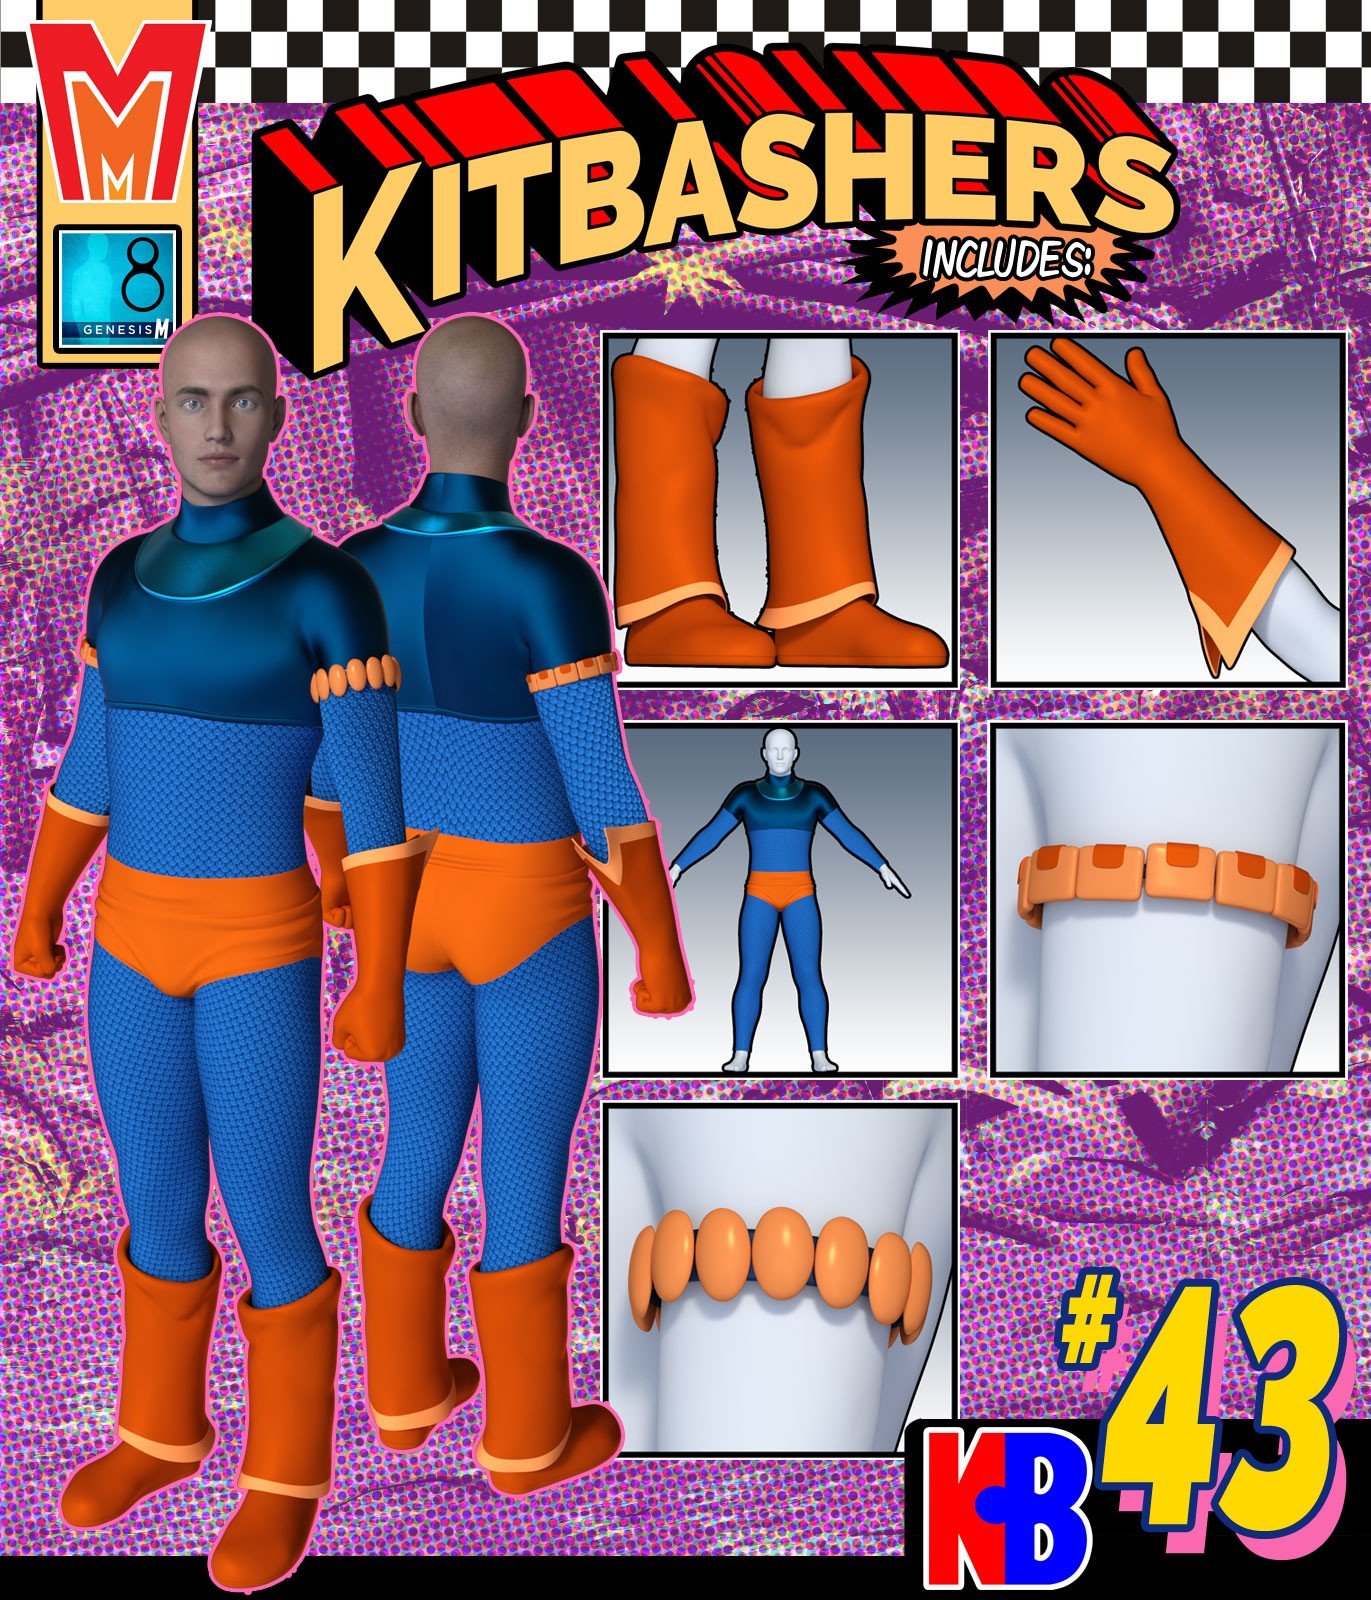 Kitbashers 043 MMG8M by: MightyMite, 3D Models by Daz 3D